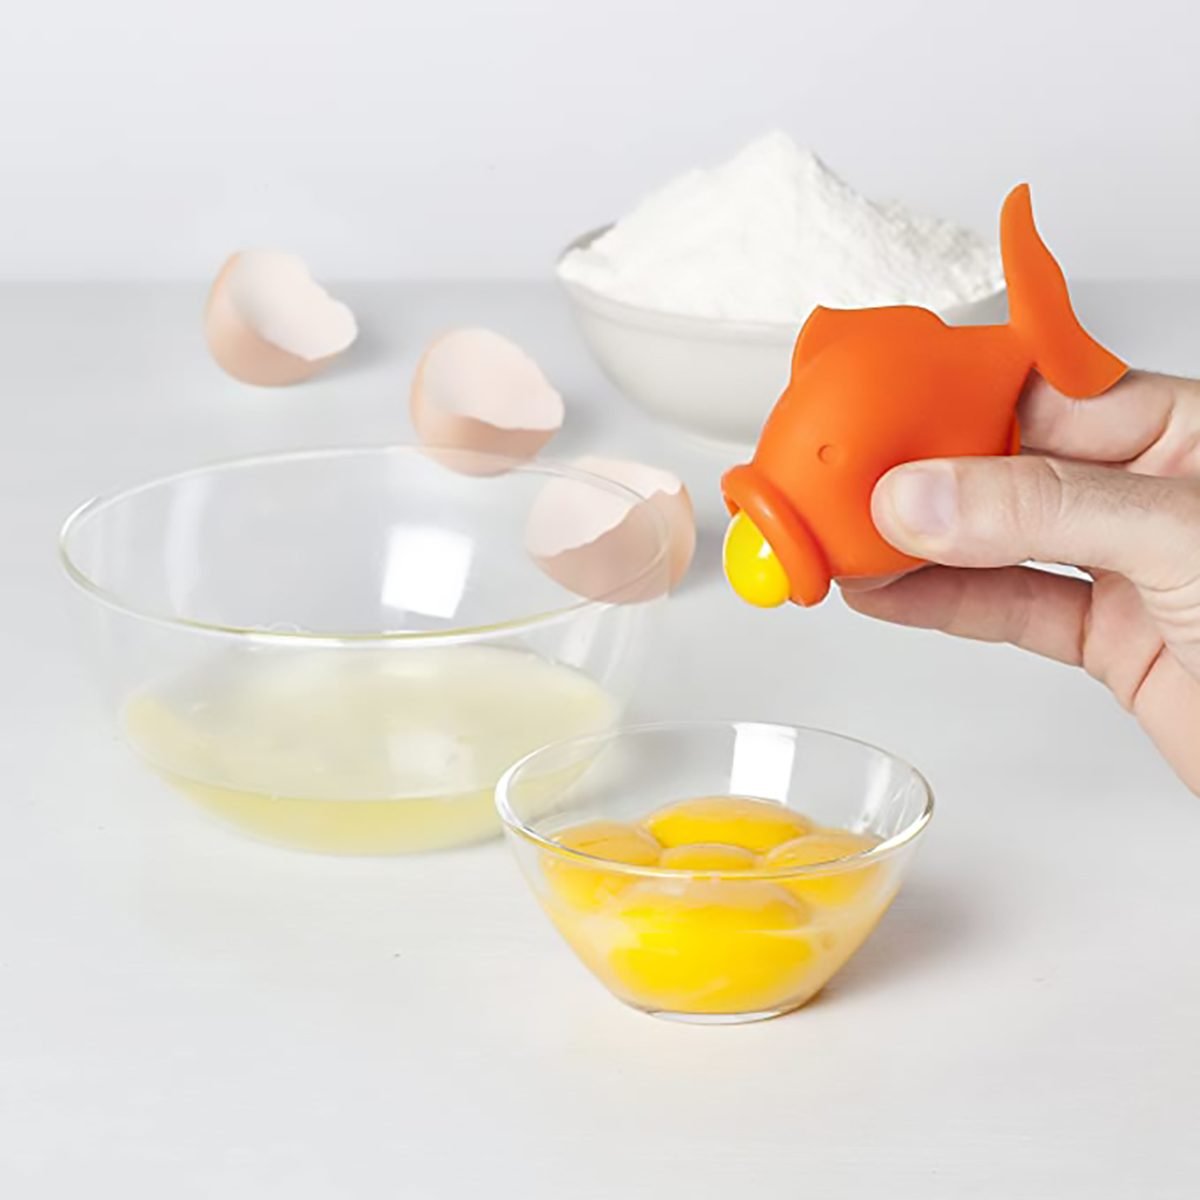 Kitchen Gadgets to Make Mealtime Fun